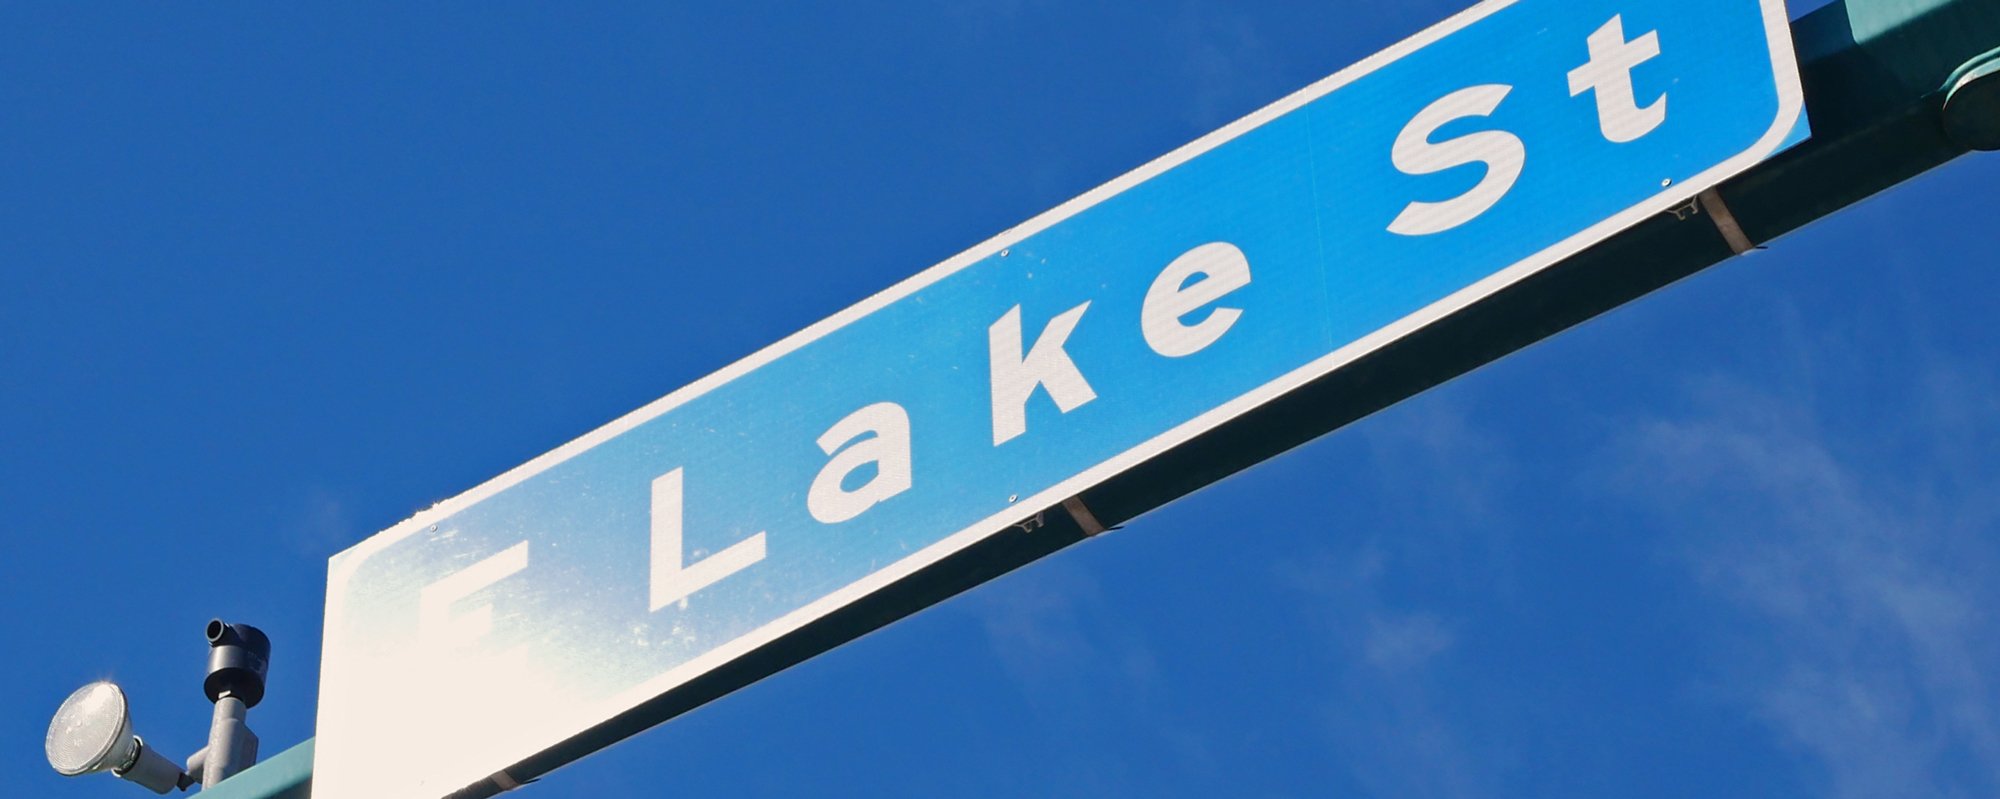 East Lake Street sign